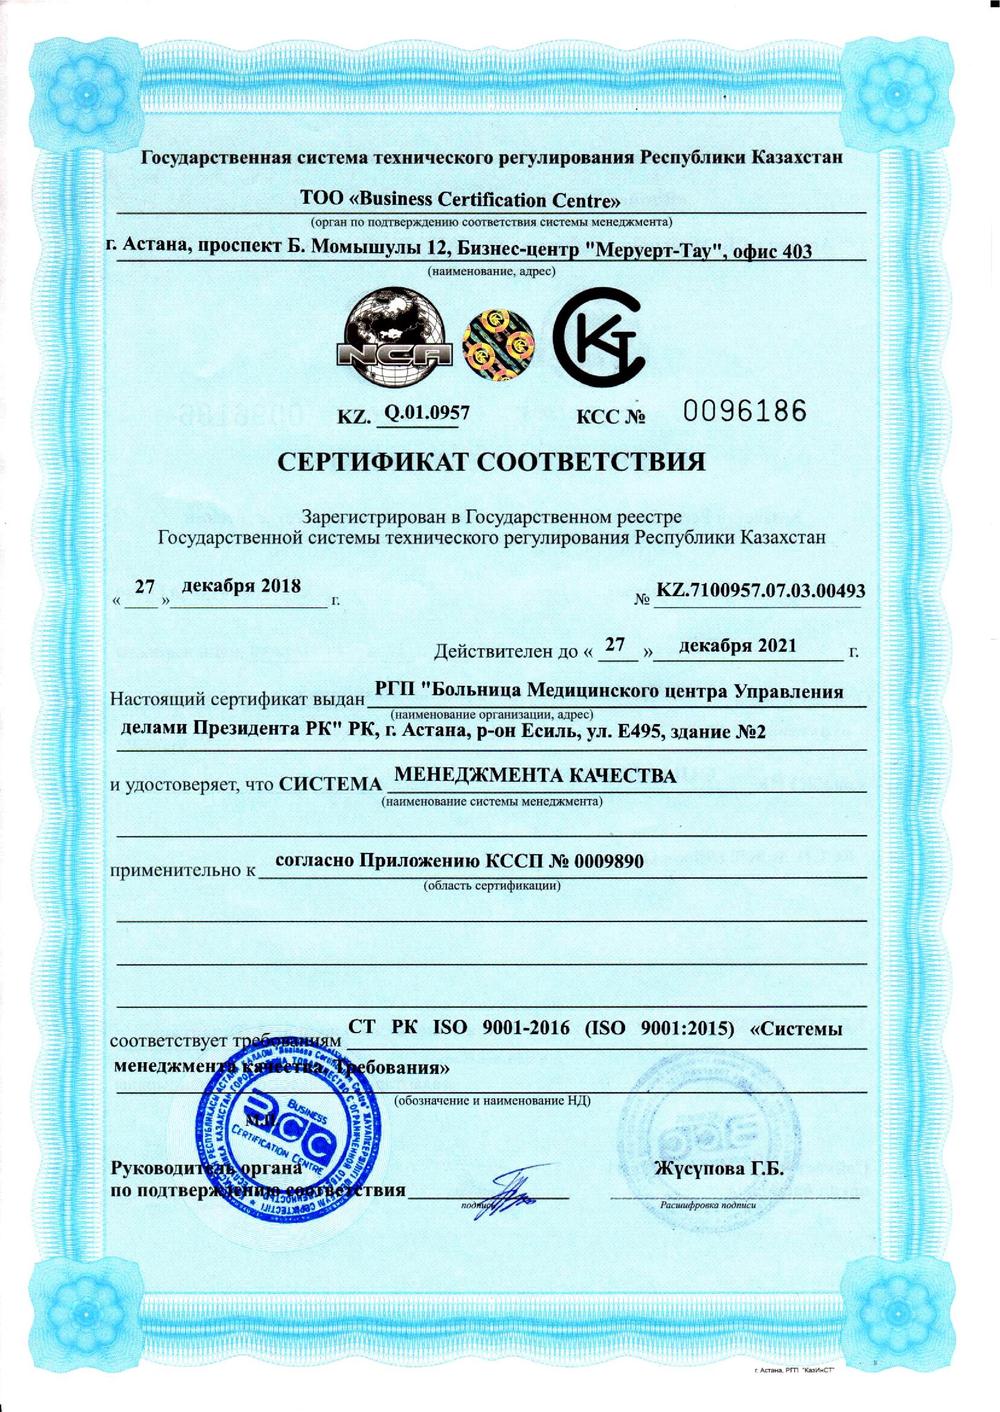 Сертификат соответствия СТ РК ISO 9001-2015